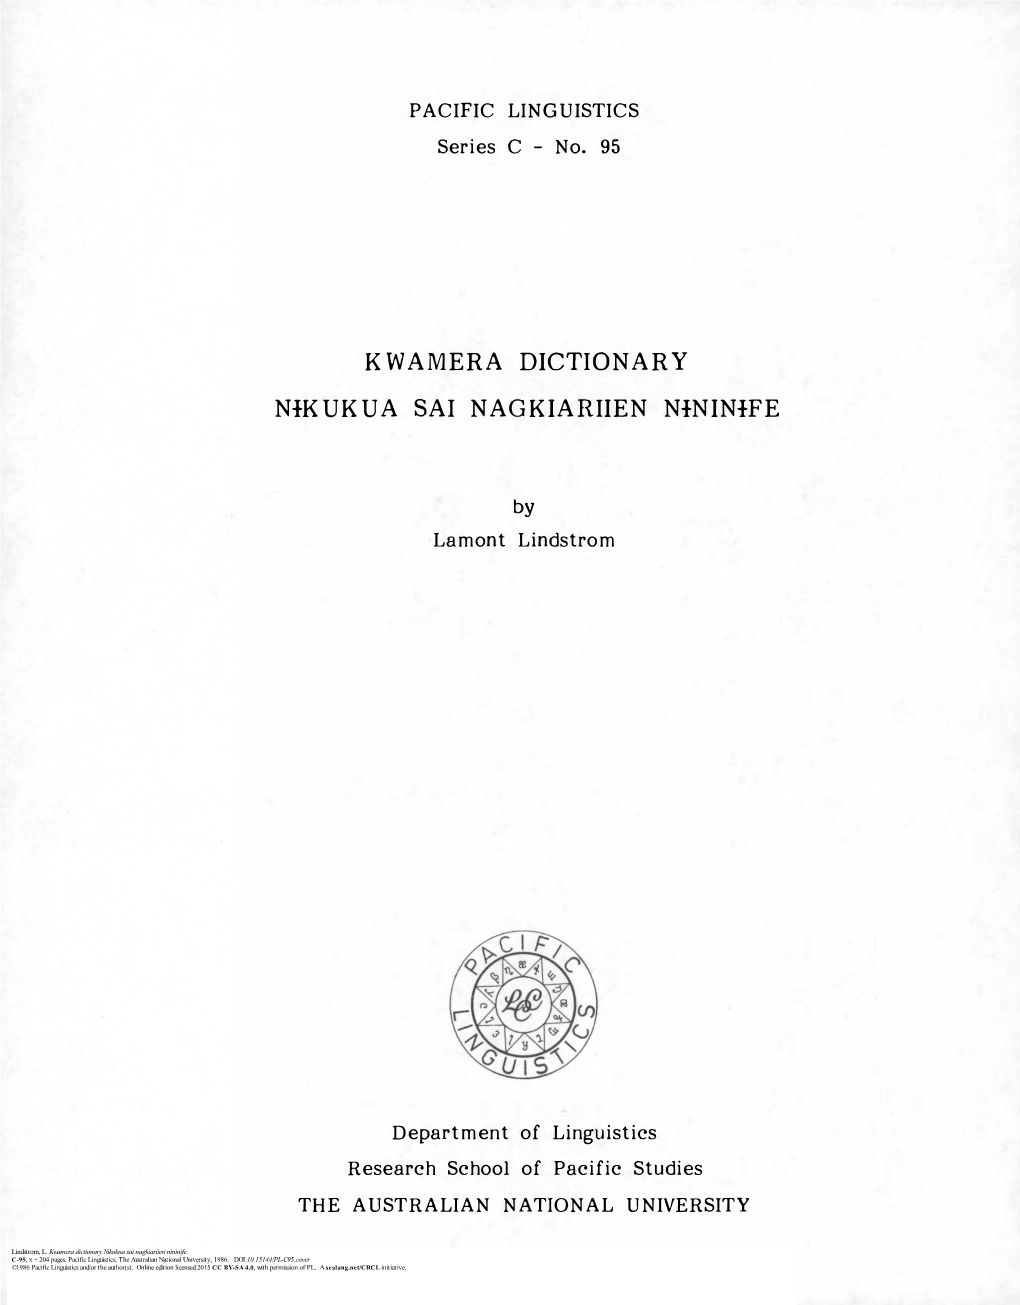 Kwamera Dictionary Nikukua Sai Nagkiariien Nininife